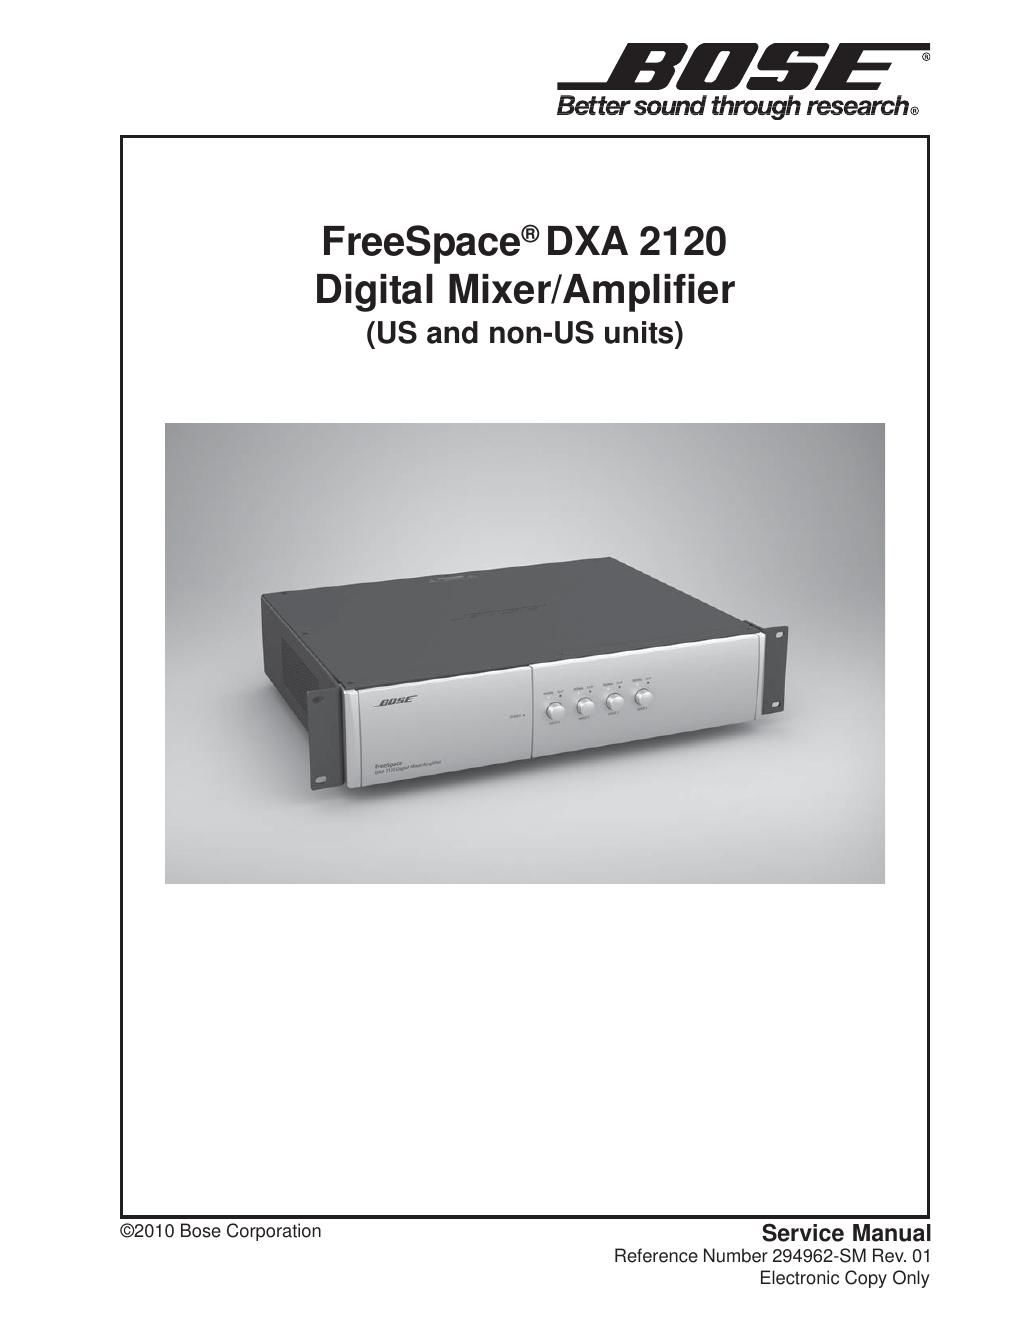 bose freespace dxa 2120 294962 service manual r1